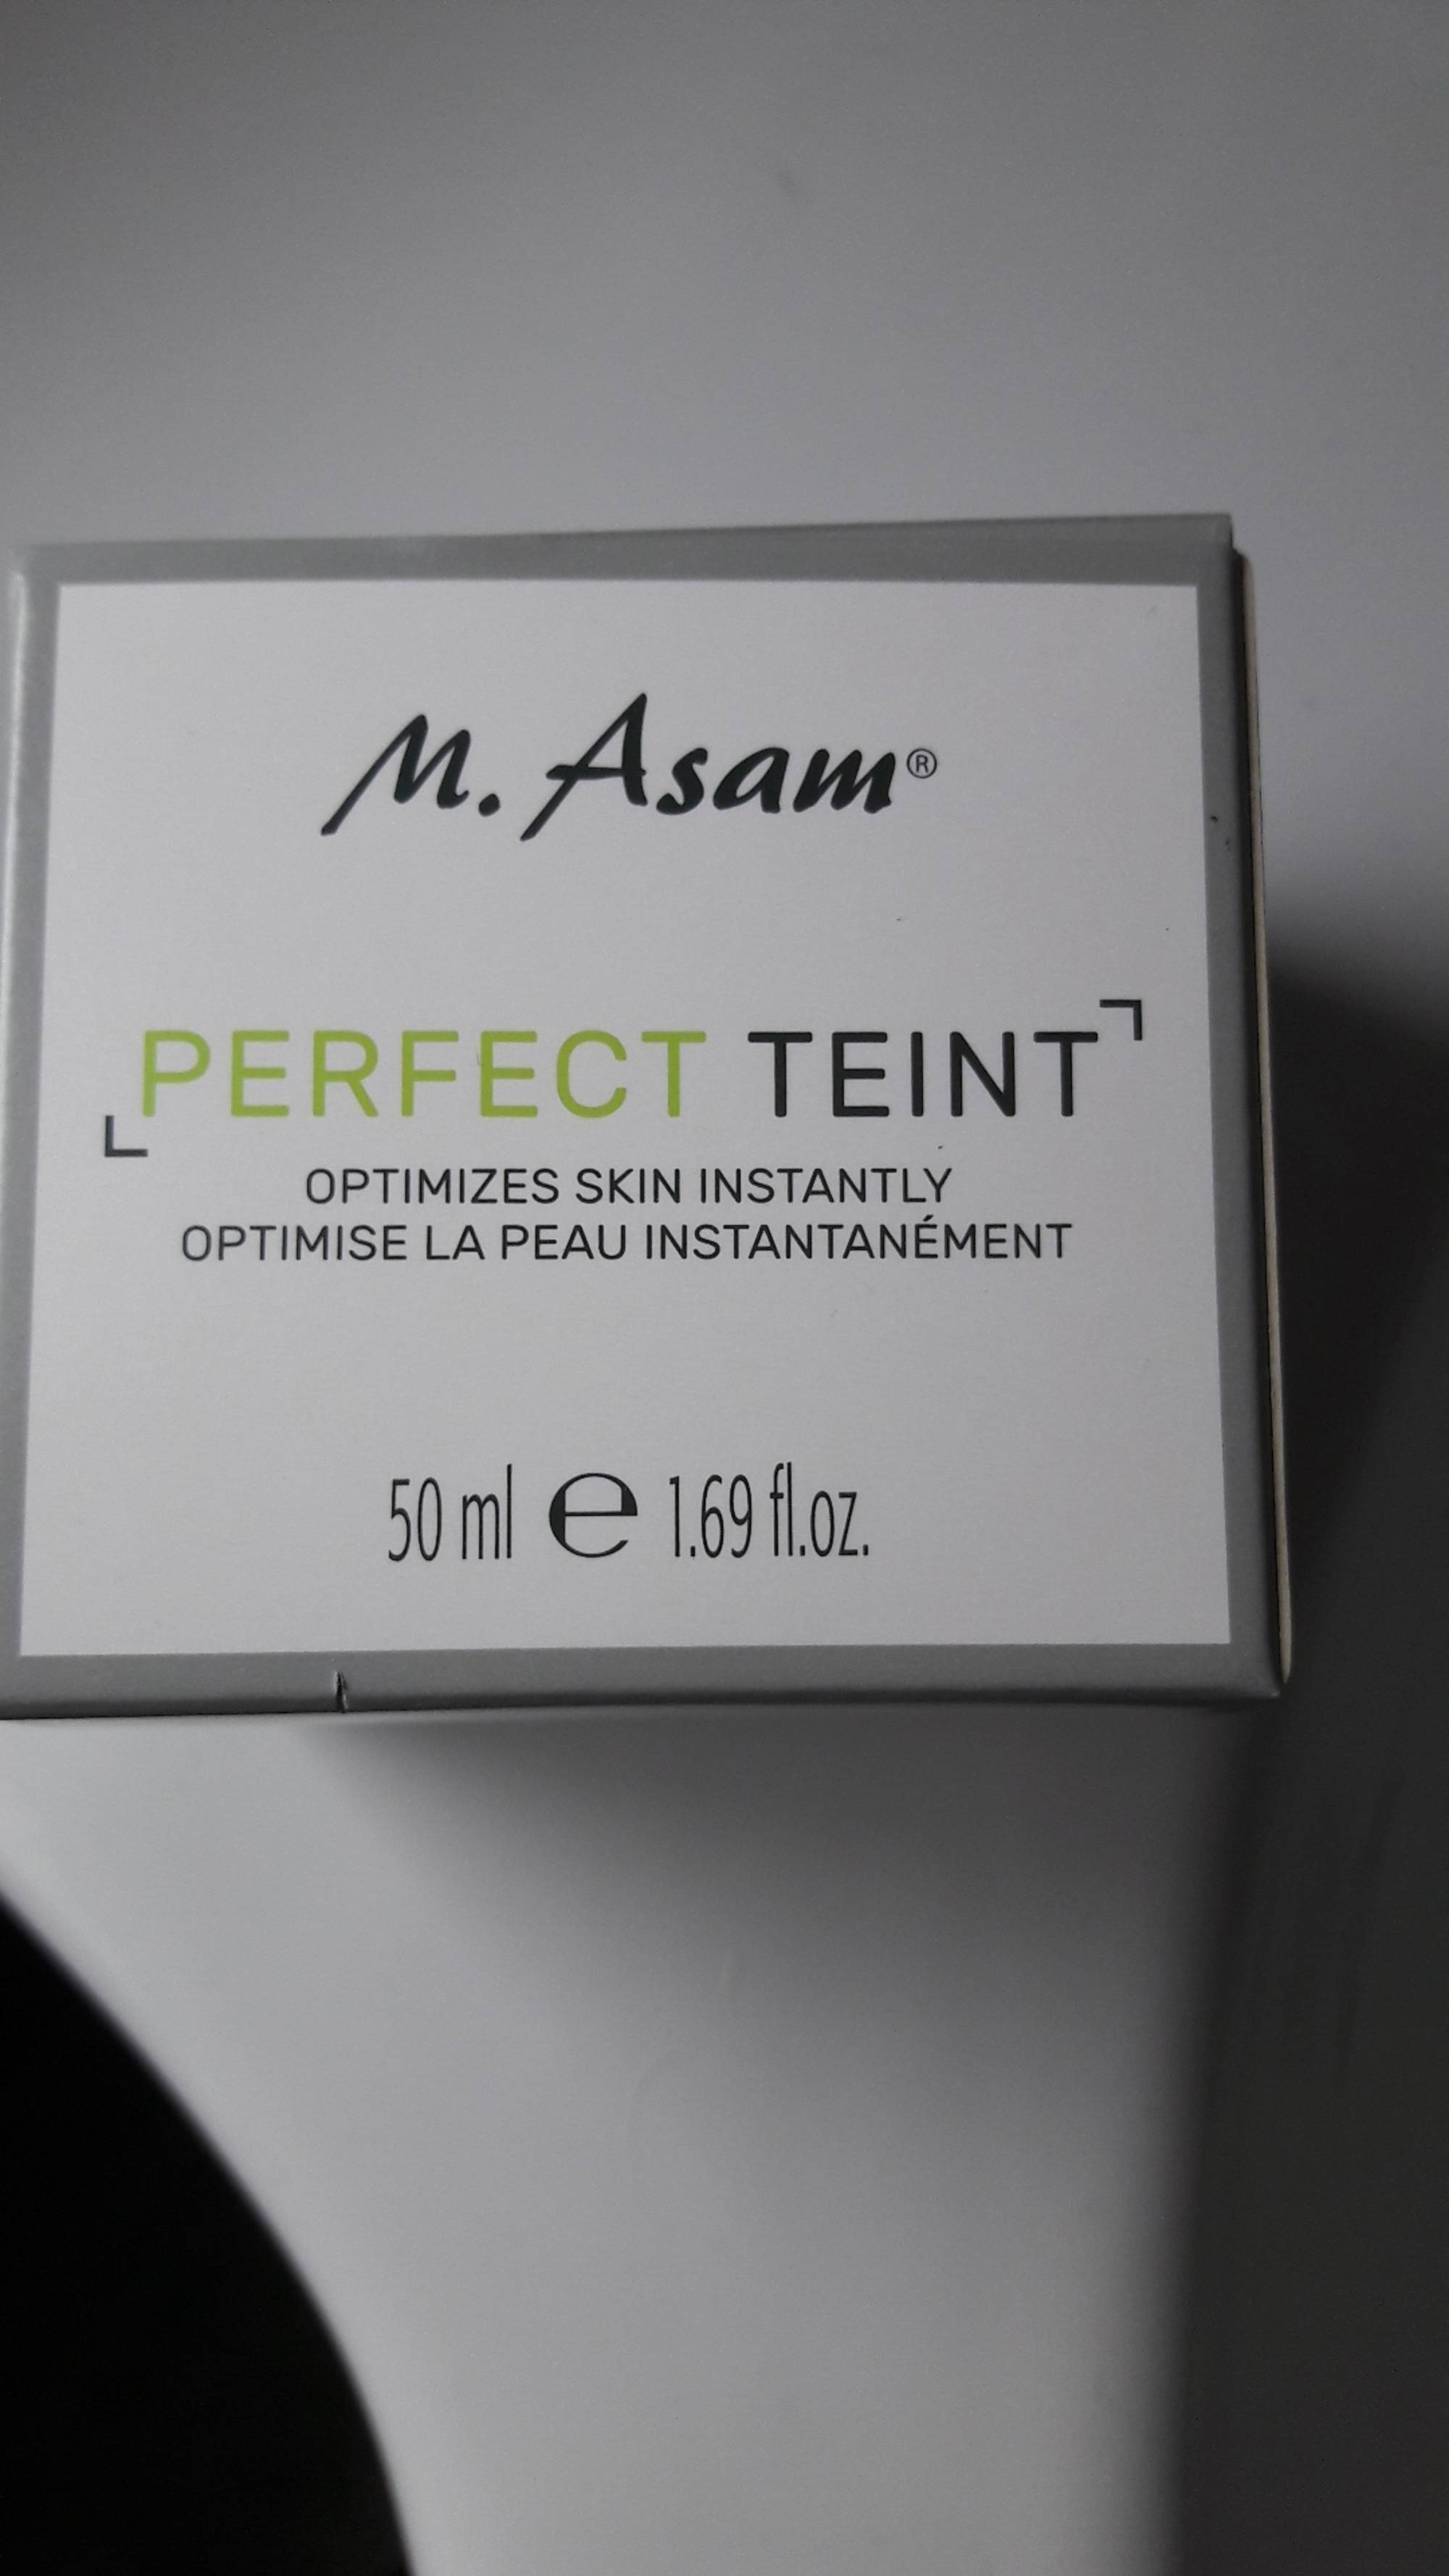 M. ASAM - Perfect teint